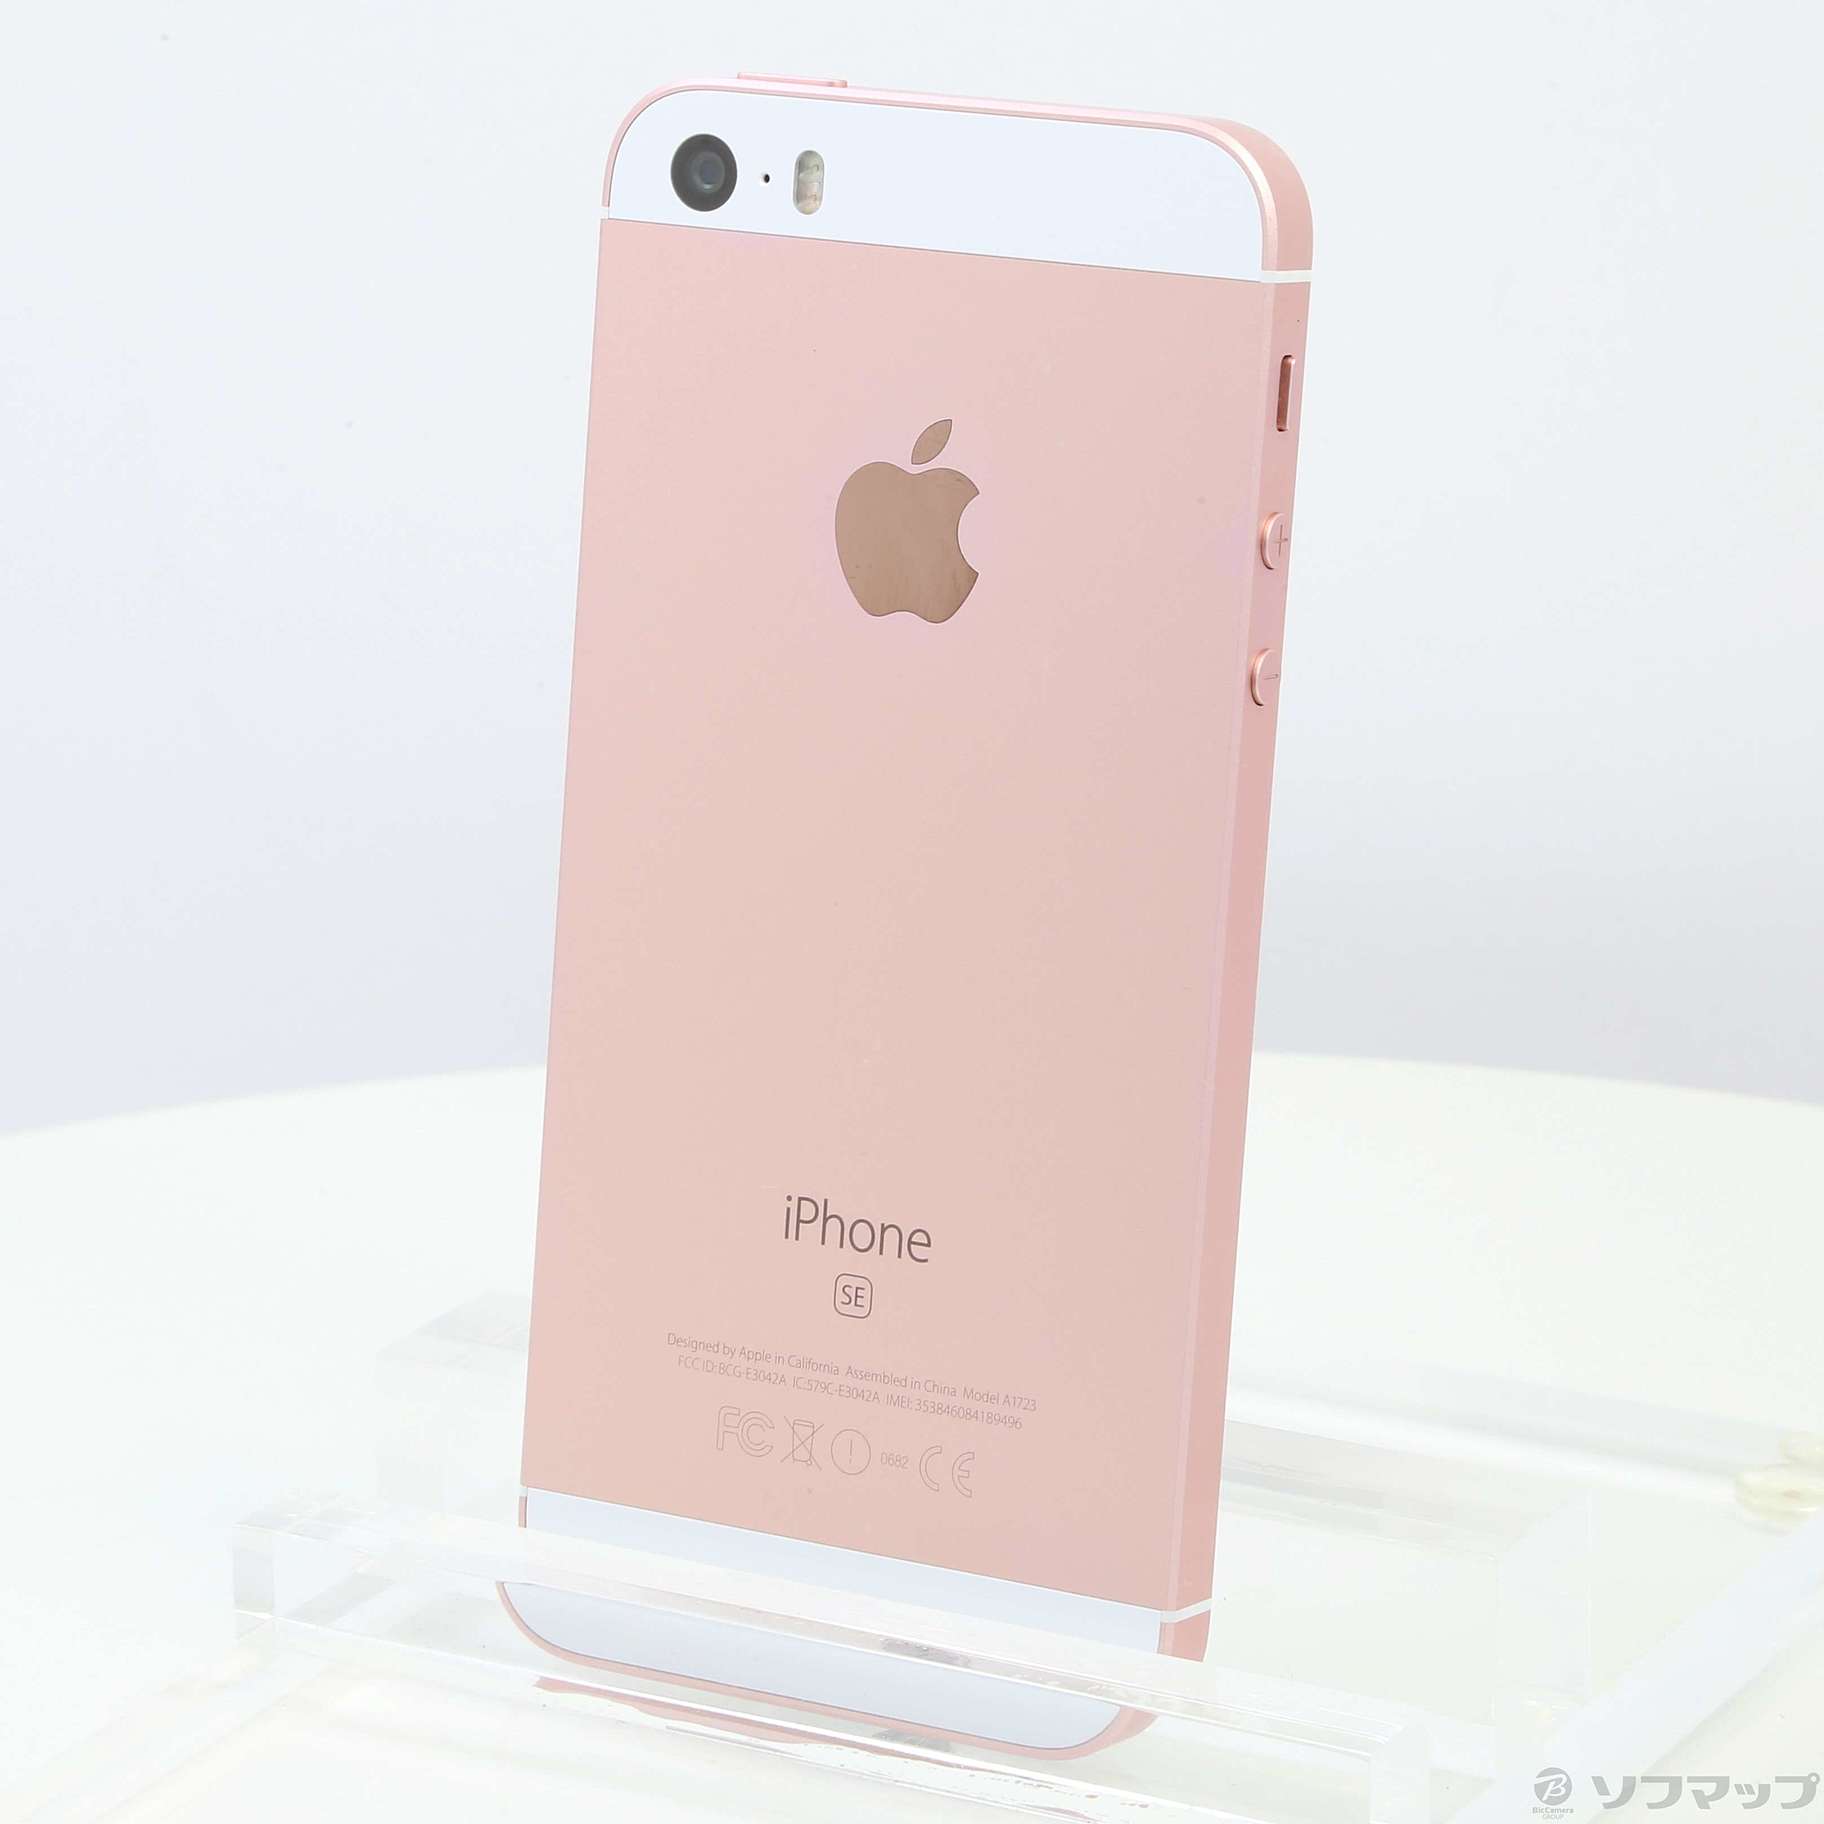 iPhone SE 64gb SIMフリー Rose Gold